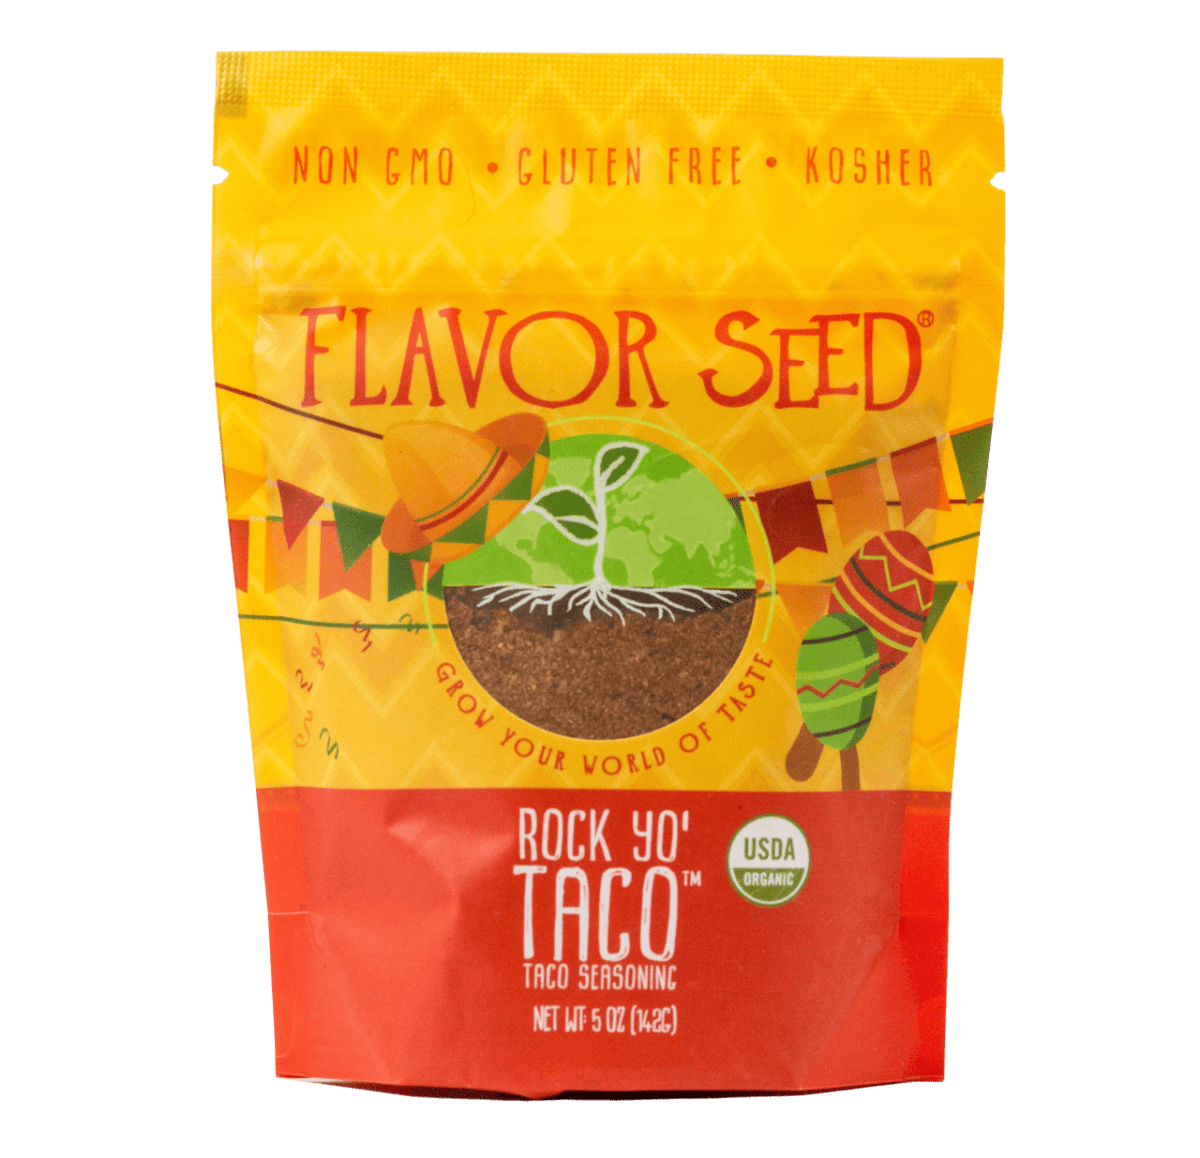 FLAVOR SEED - Rock Yo' Taco Organic Taco Seasoning Mix | Makes 4-5 lbs. of taco meat per 2.6 oz. jar - Flavor Seed